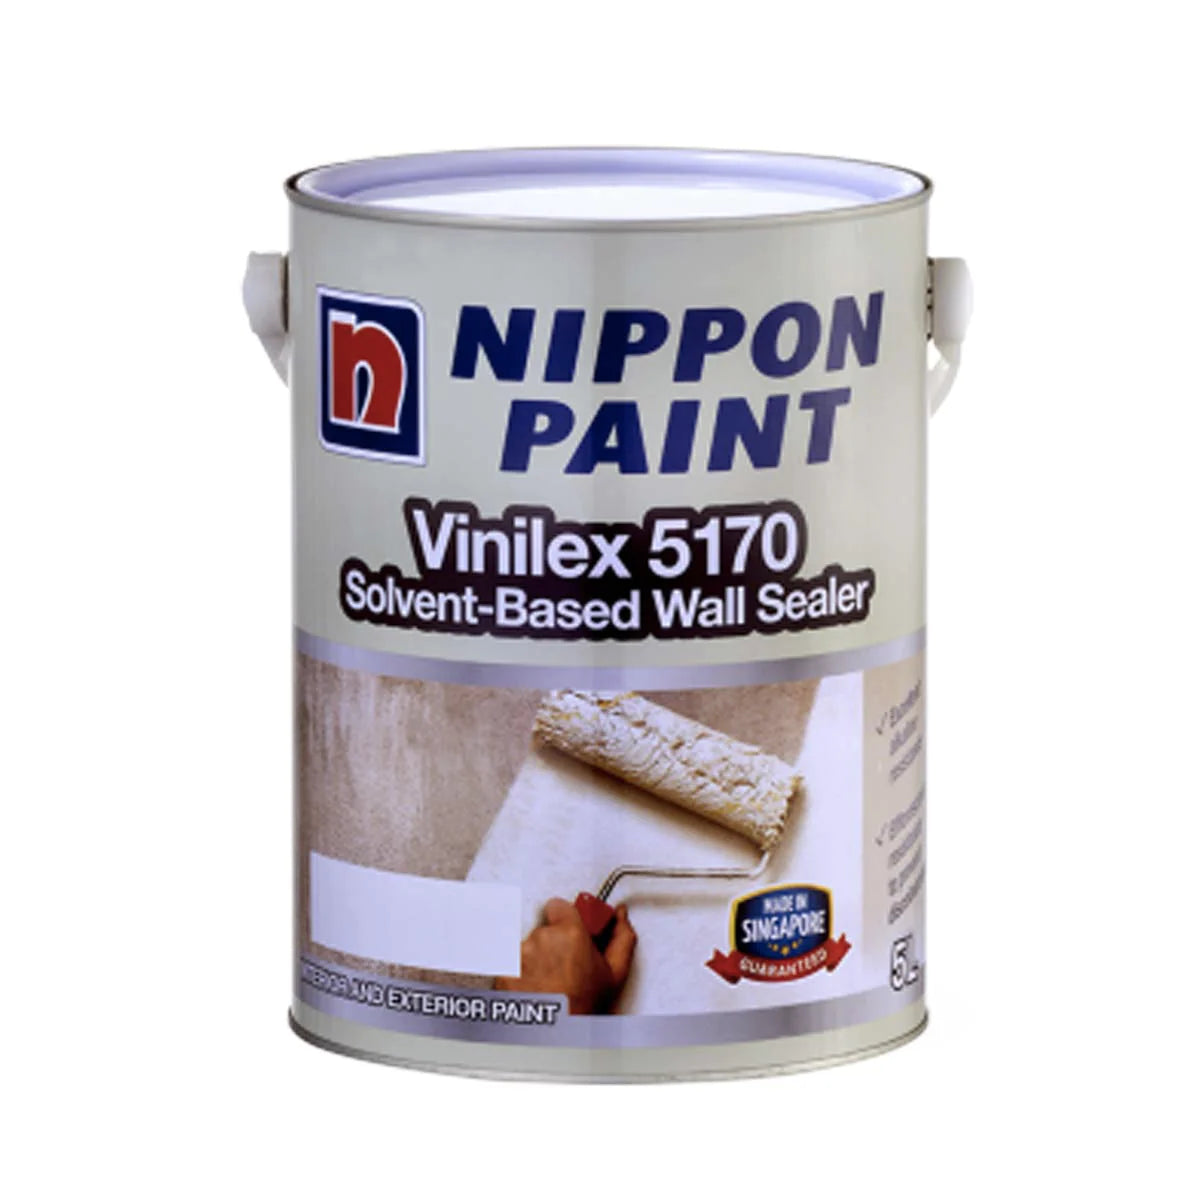 NIPPON PAINT VINILEX 5170 SOLVENT BASE WALL SEALER